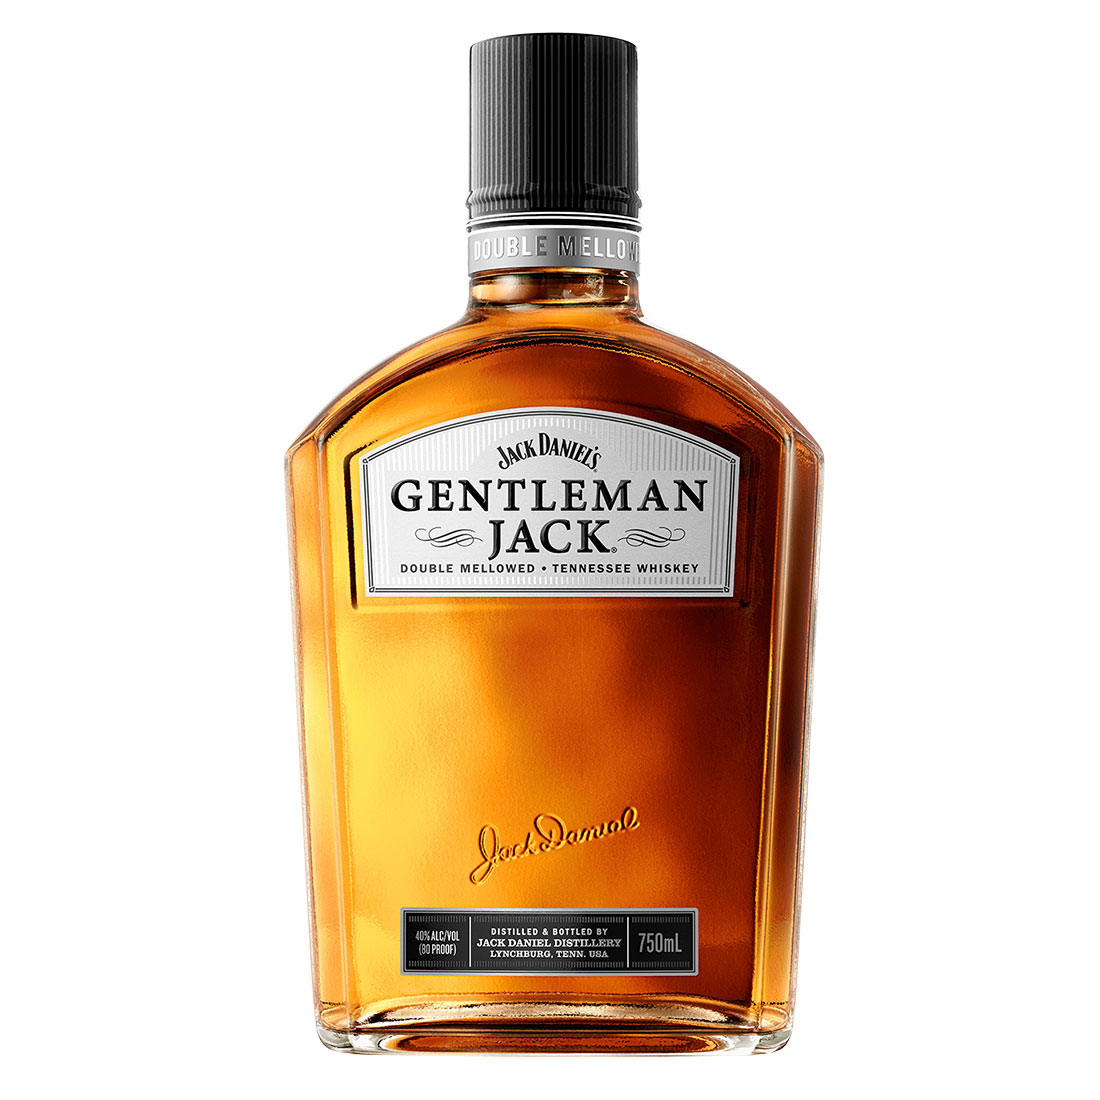 LB_Bottle-Jack-Daniels-Gentleman-Jack---Front---750ML